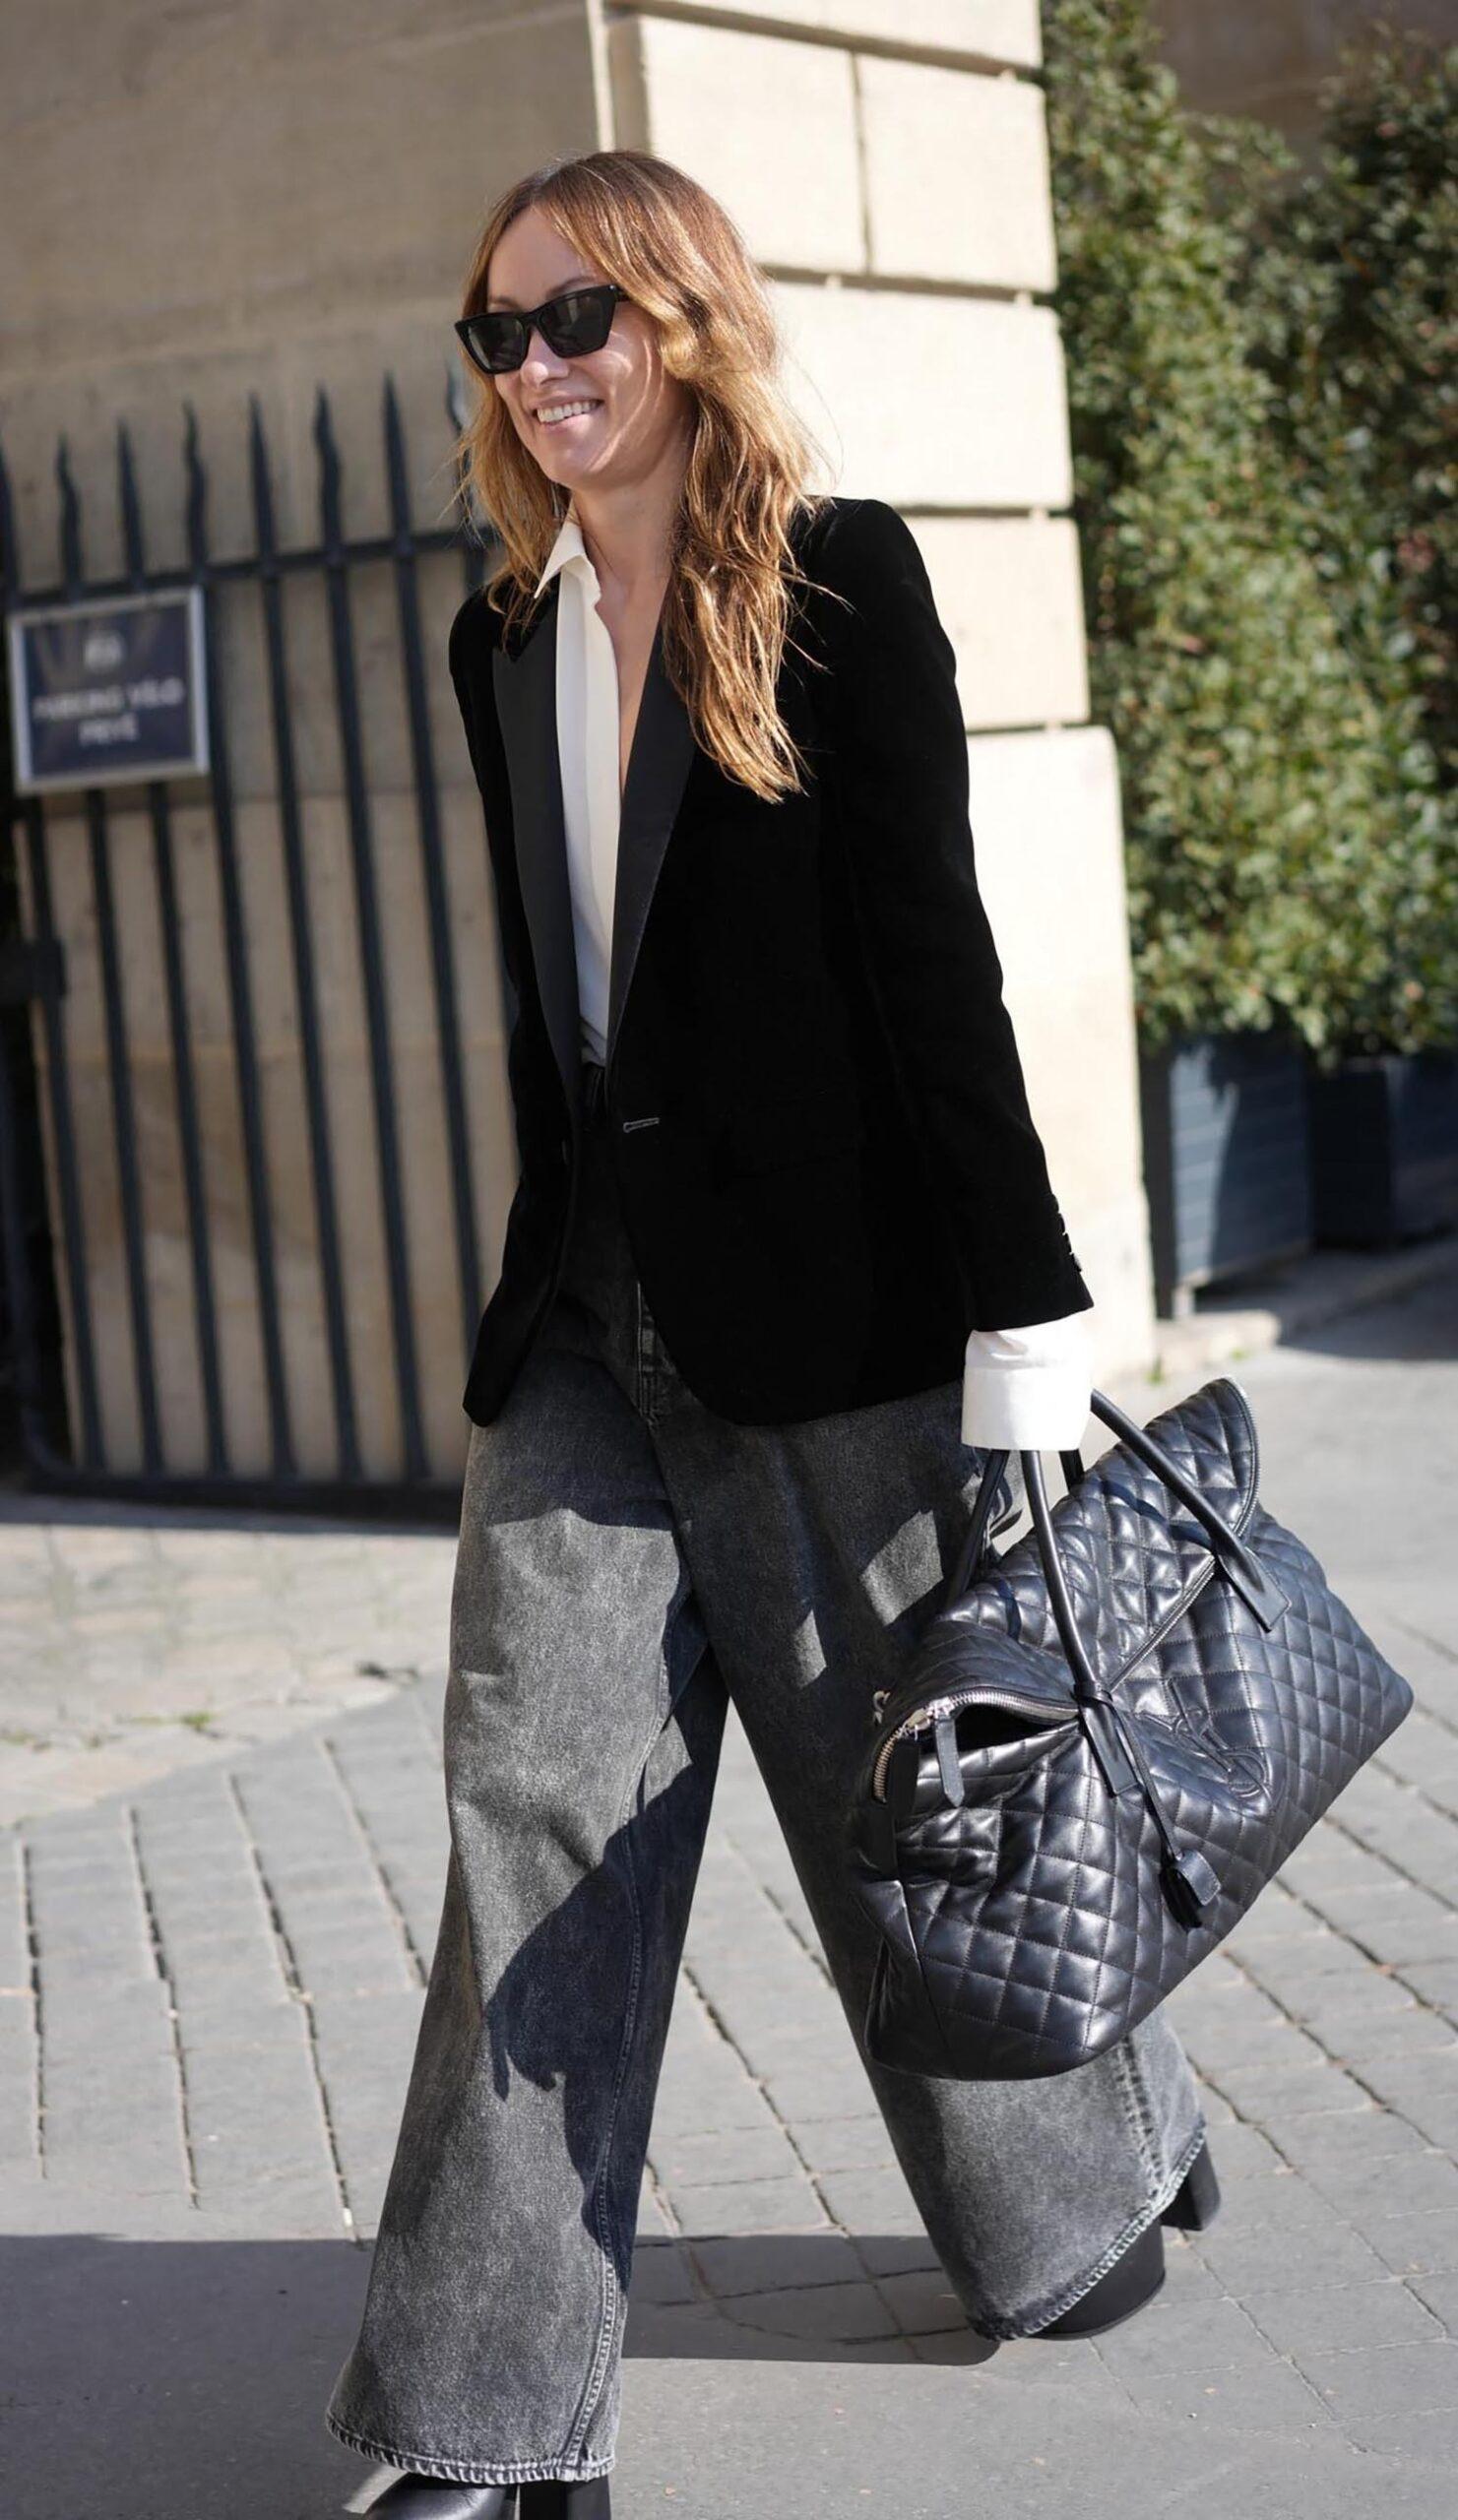 Olivia Wilde cuts a chic figure as she walk to the Dior Show in Paris.